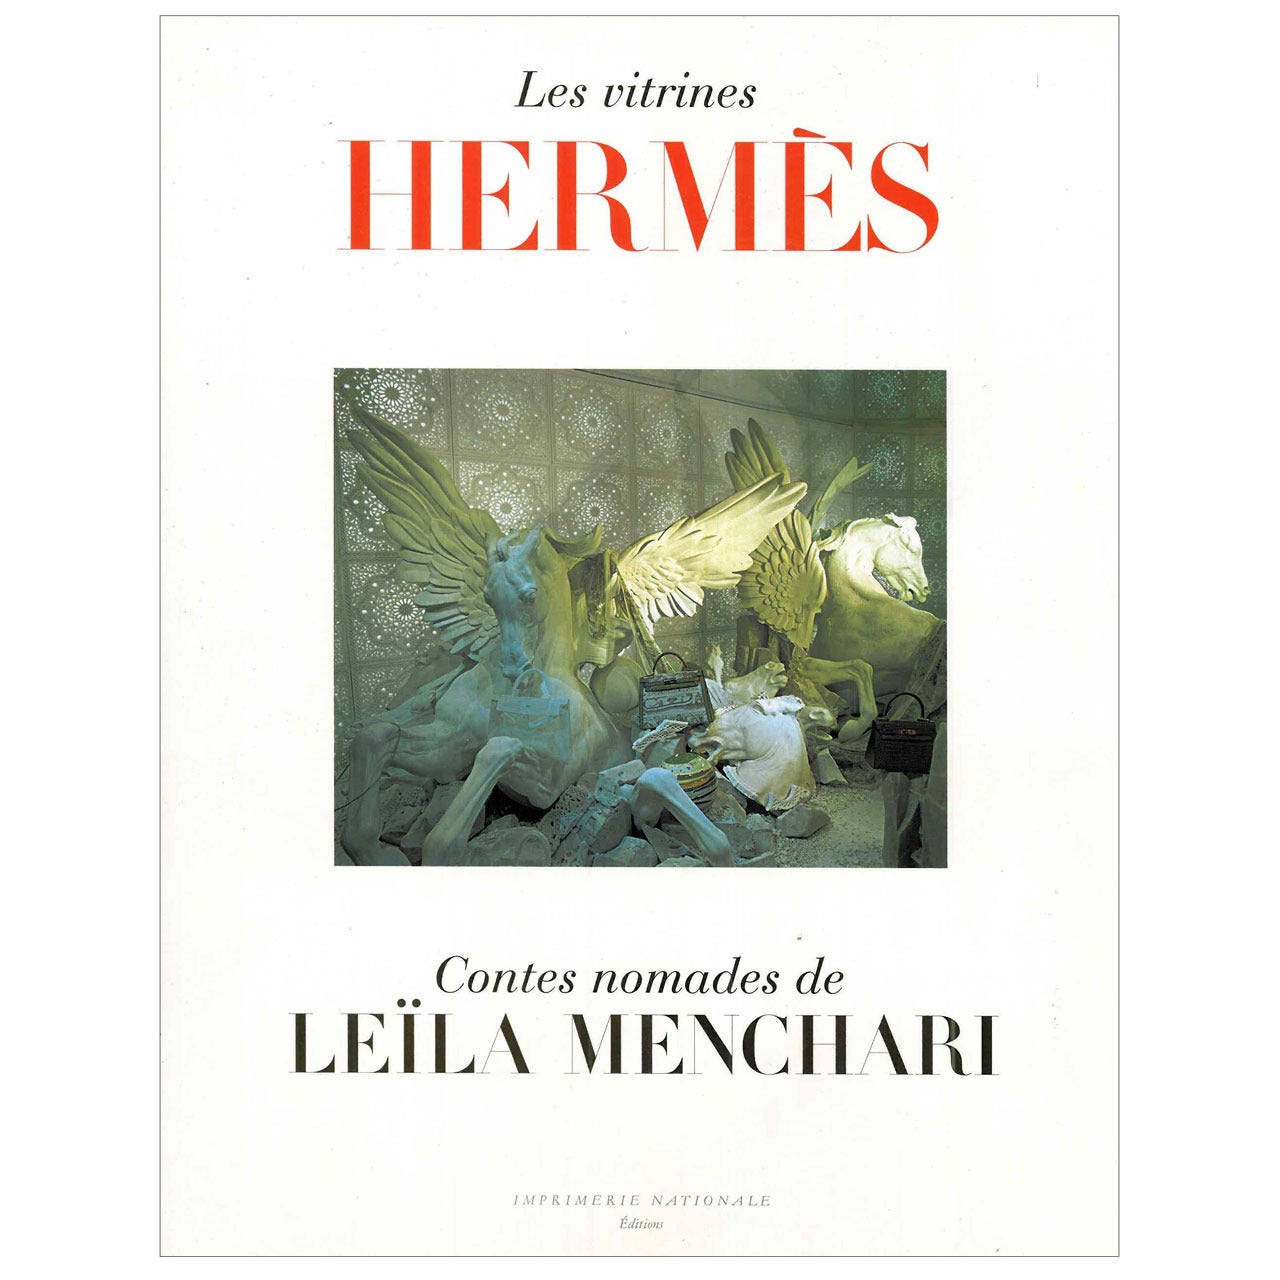 Les Vitrines Hermes (Book)